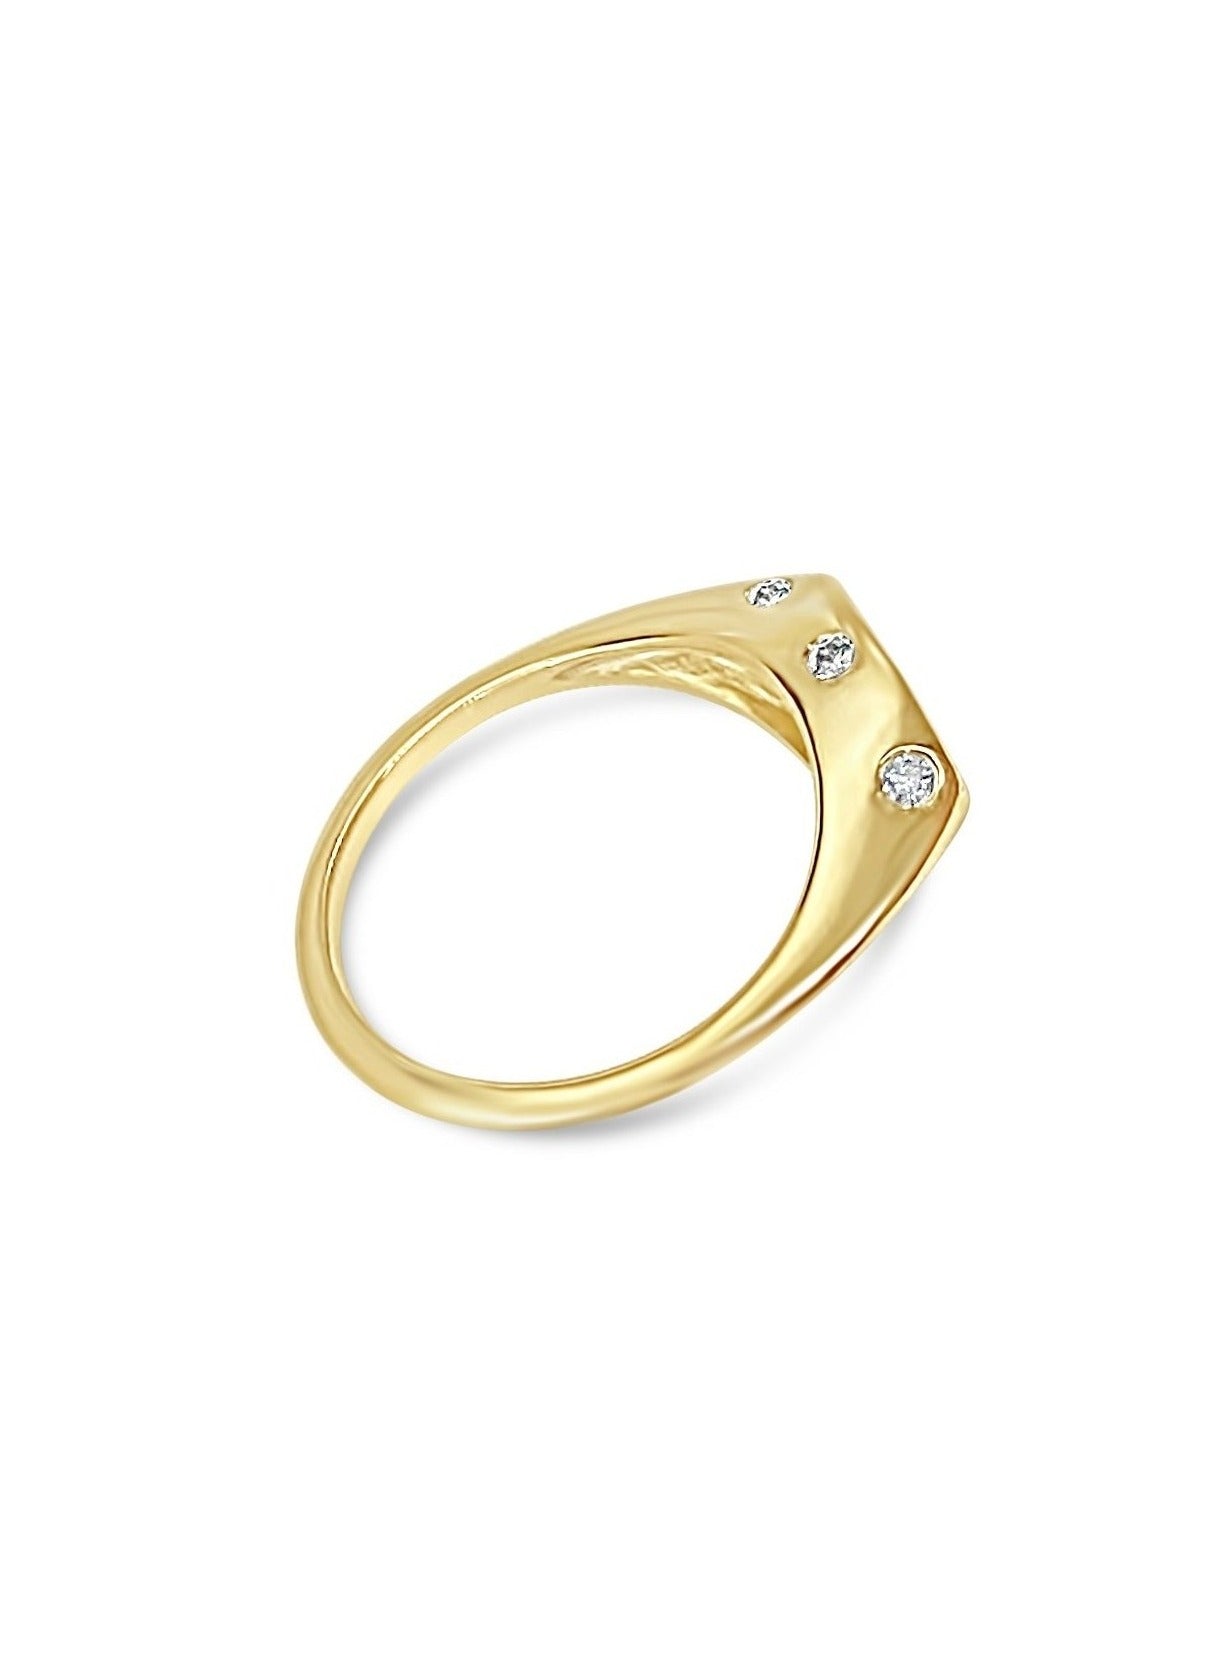 Jacqueline Signet Ring in 10K Solid Gold